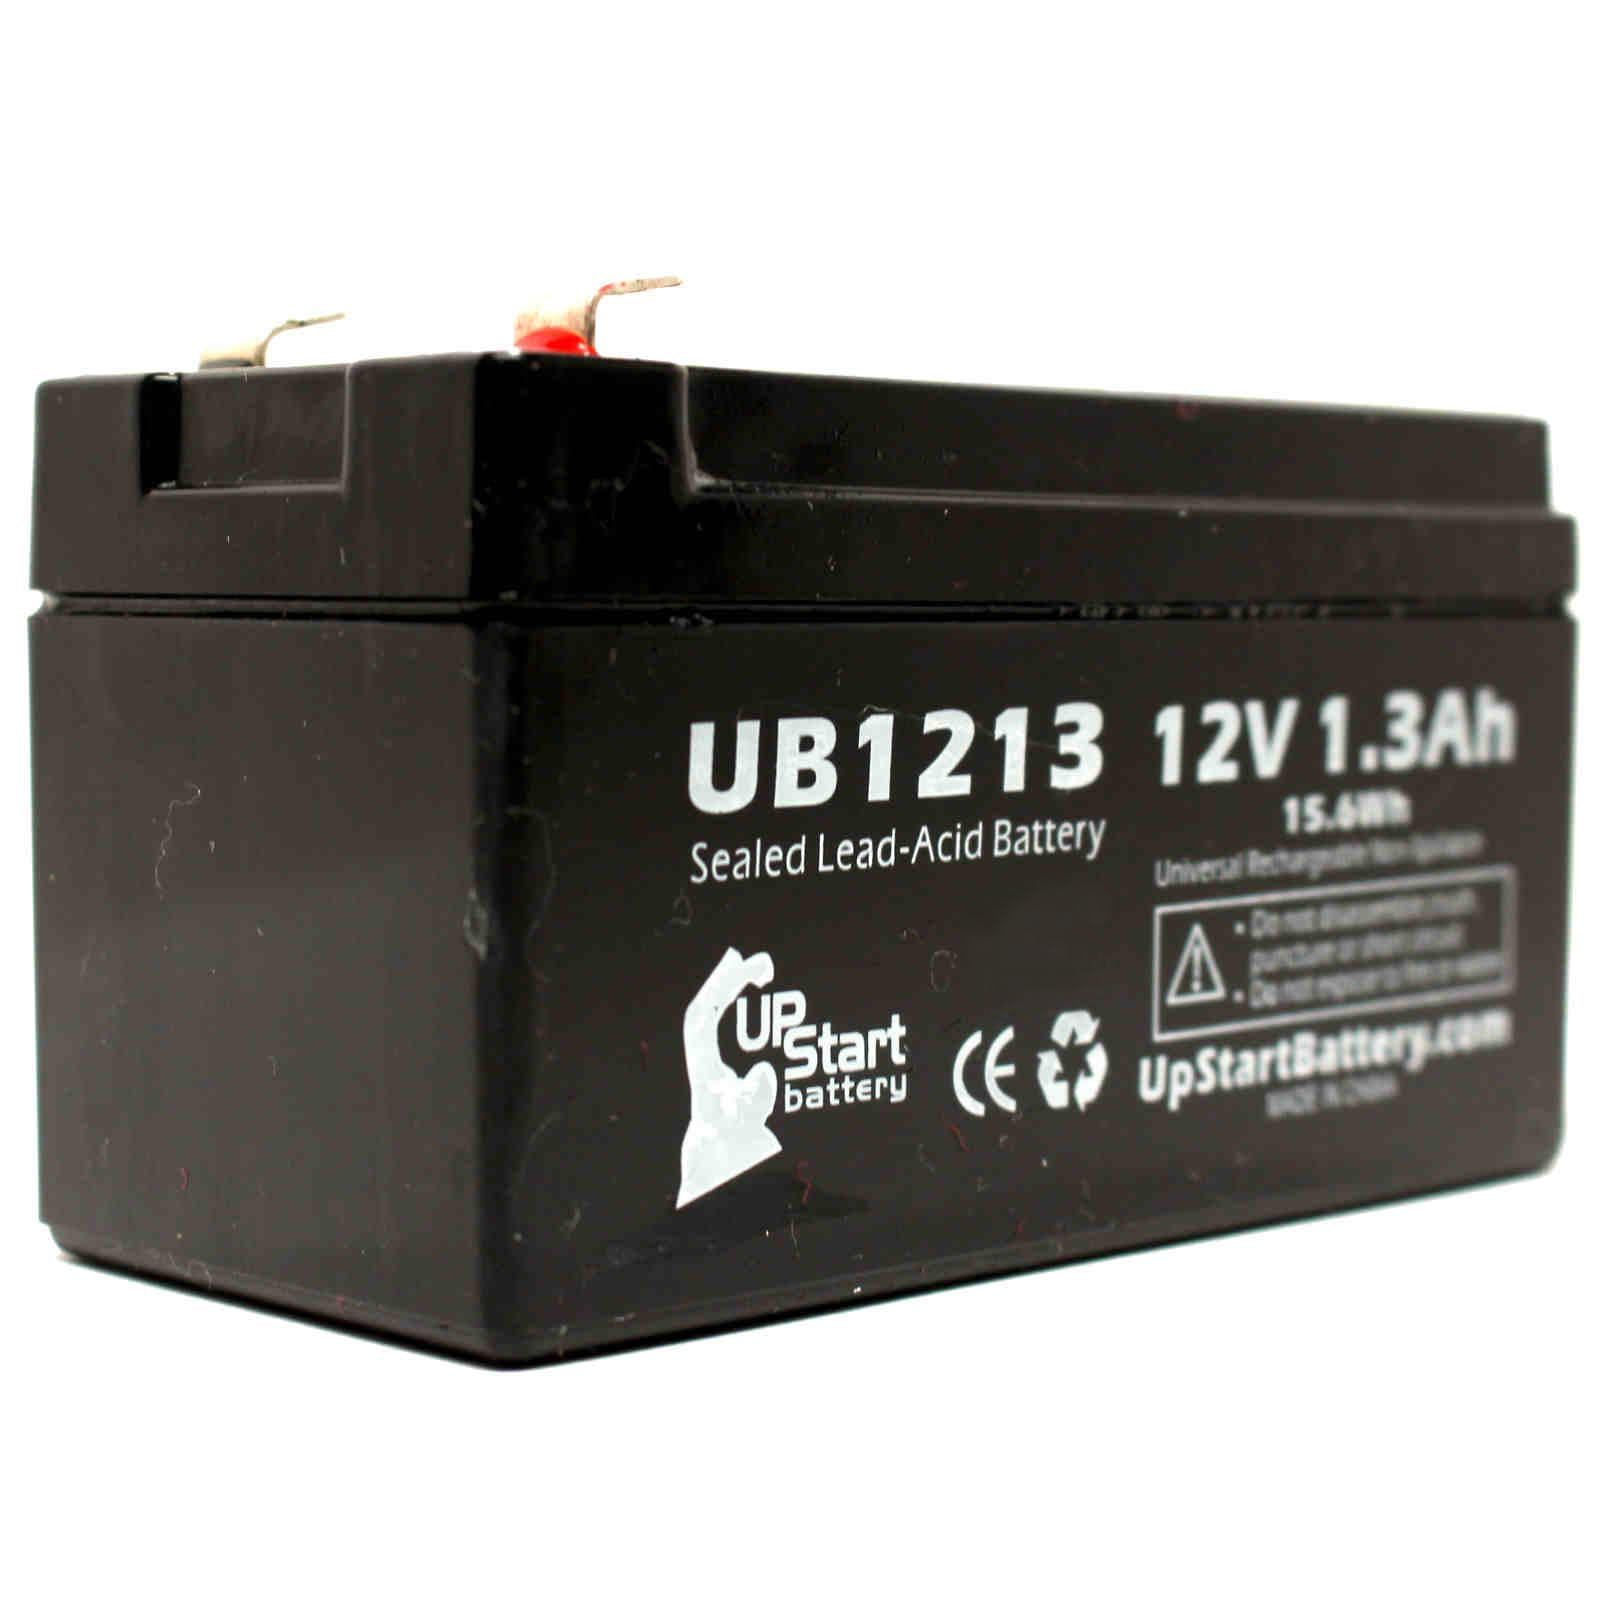 F battery. Sealed lead-acid Battery 12v PG 12. 700-202 Аккумулятор (12v, 1.2Ah, NICD) Hammer. Батарея 12v 1300. Аккумулятор f3 1807.